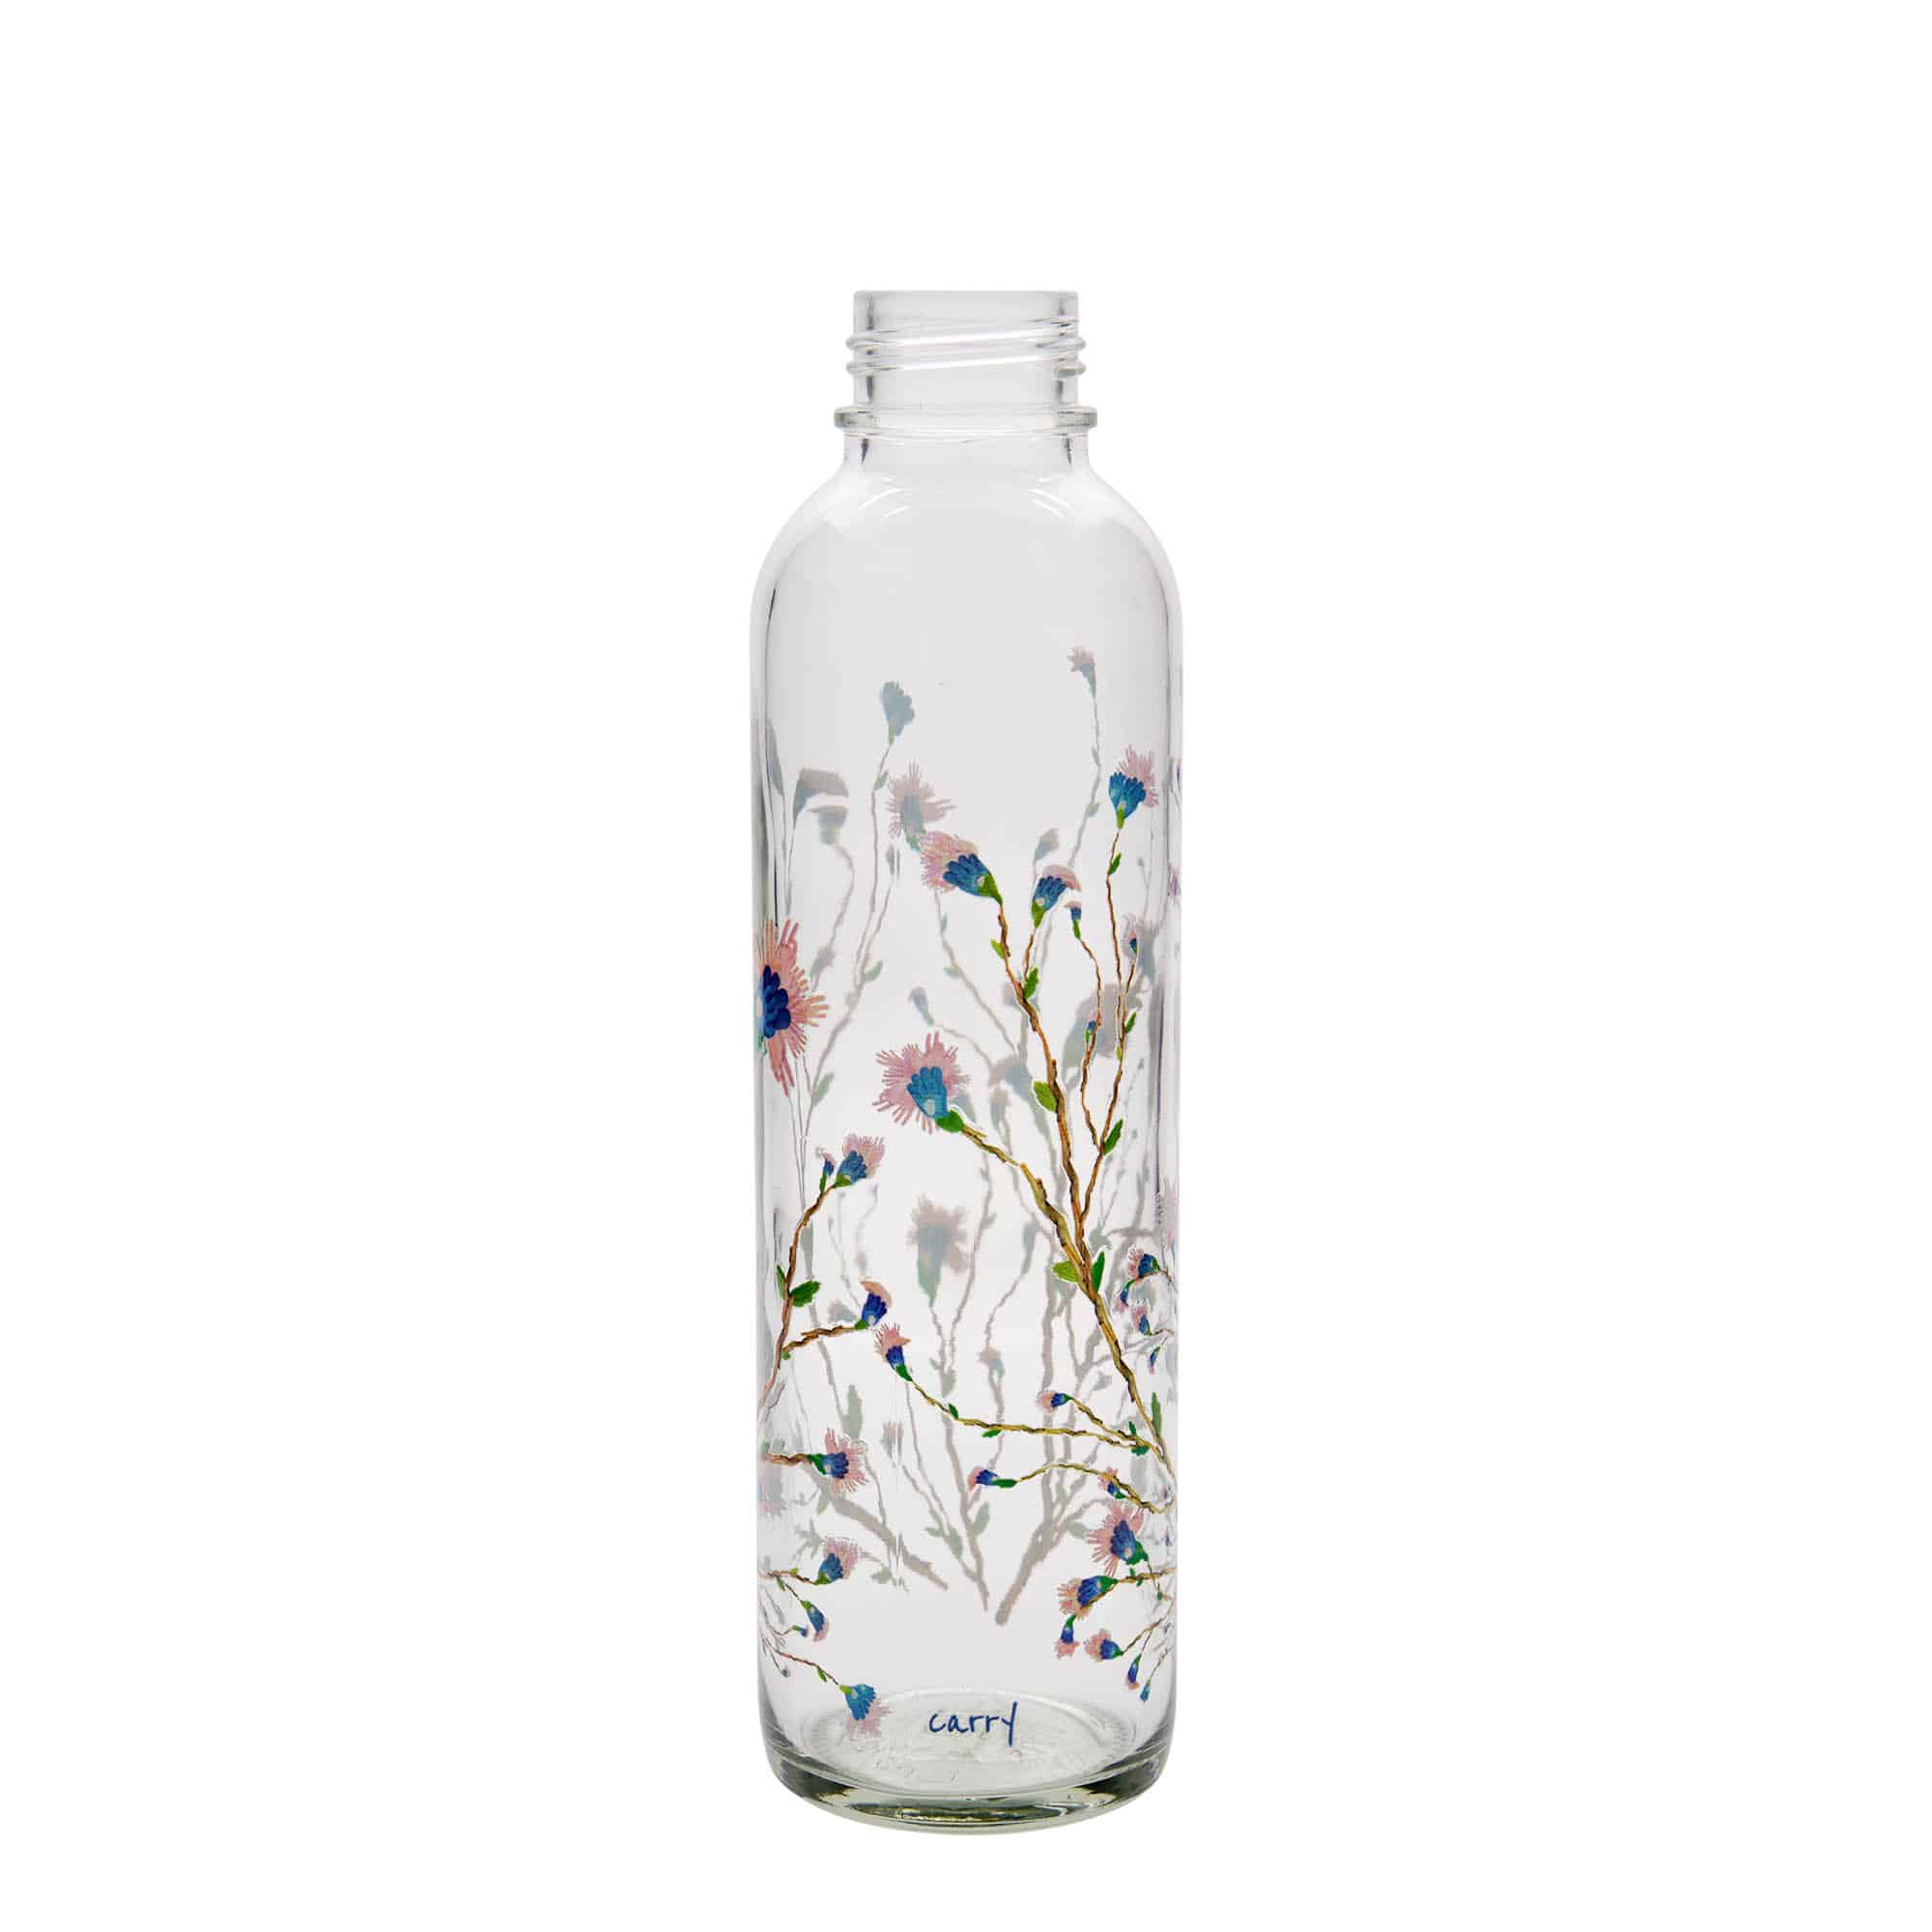 700 ml water bottle ‘CARRY Bottle’, print: Hanami, closure: screw cap